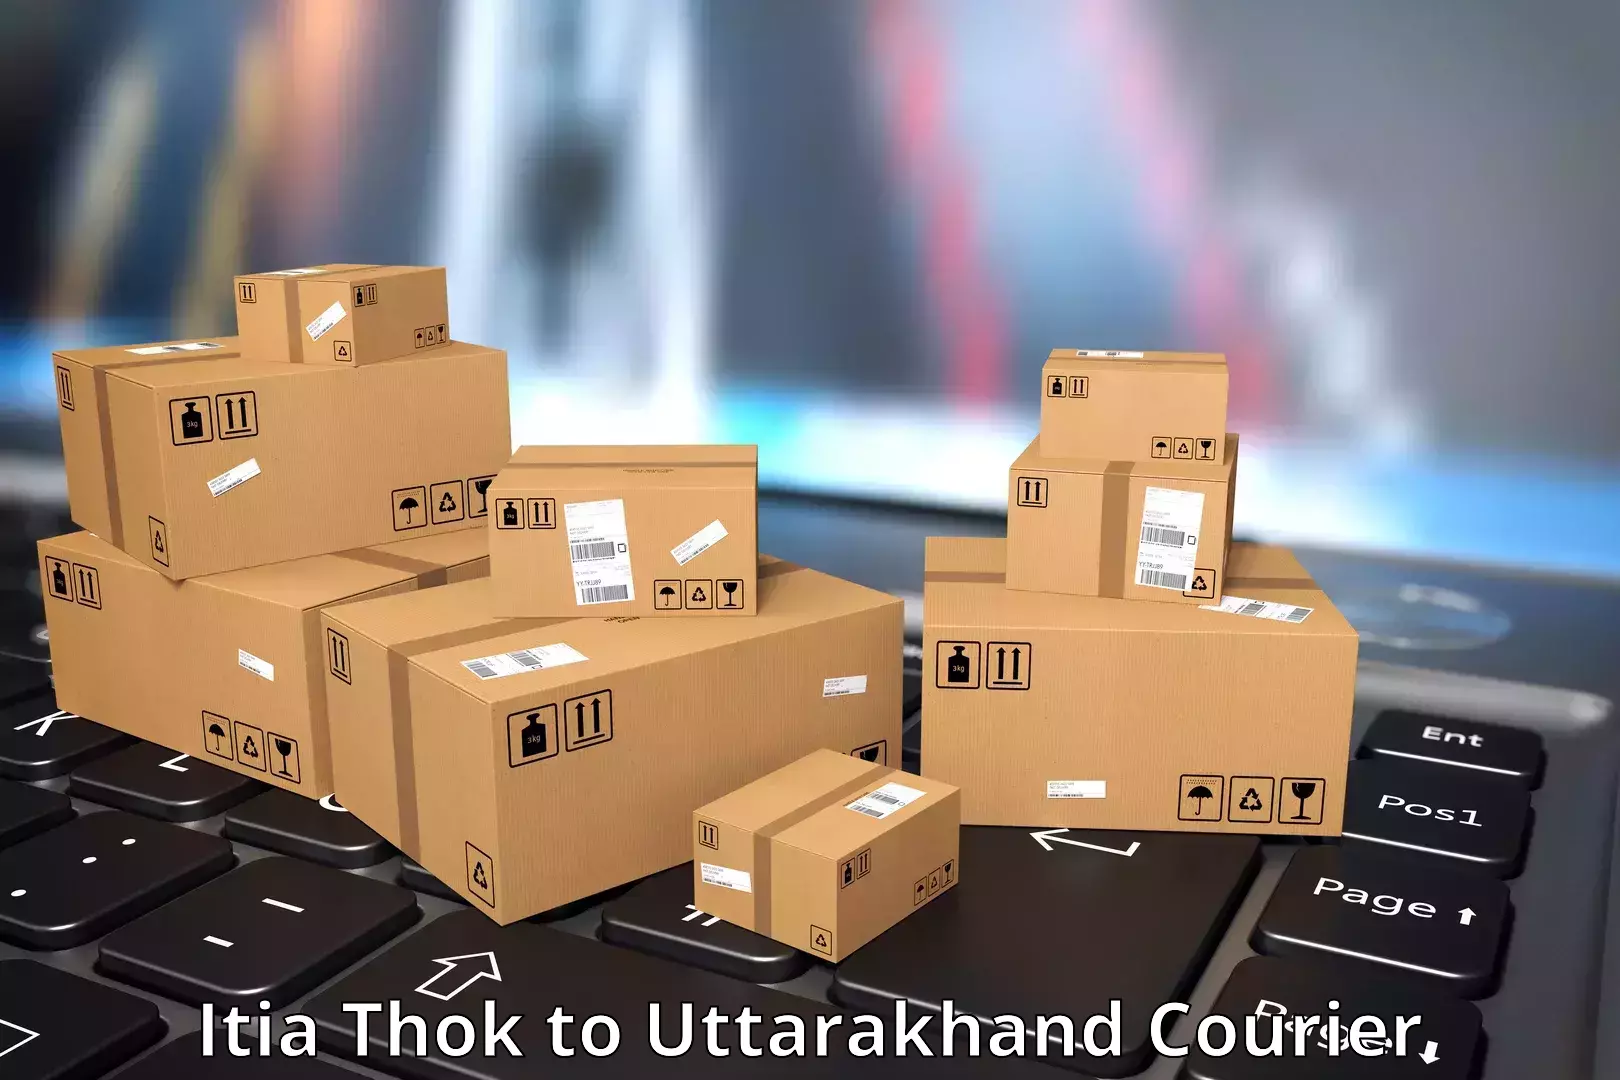 Quality courier partnerships Itia Thok to Kashipur